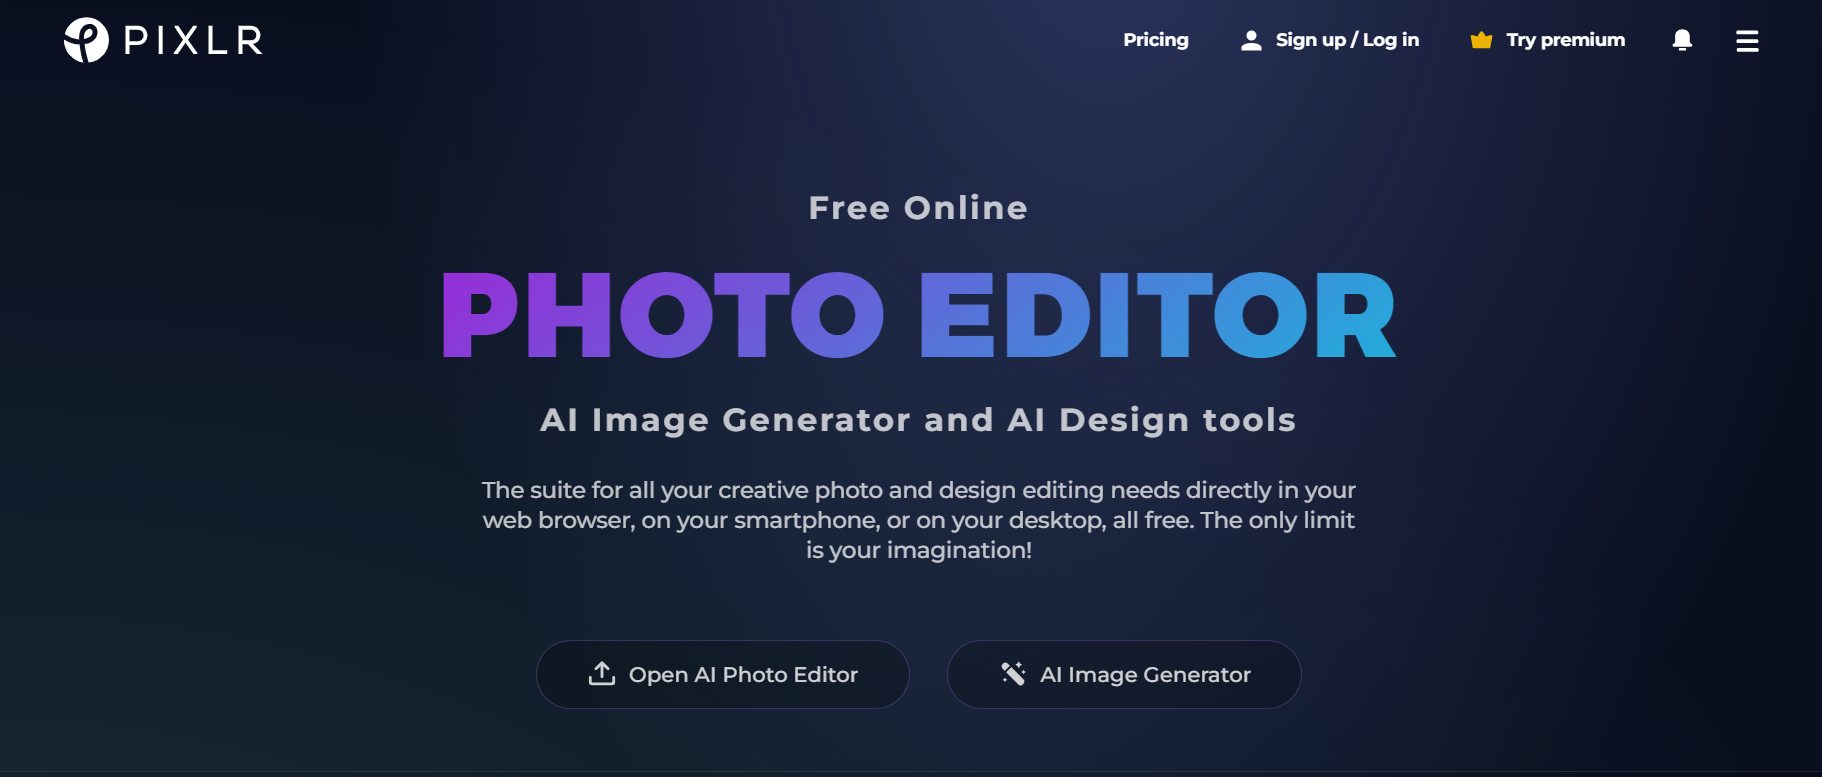 Pixlr - Free Graphic Designer Software